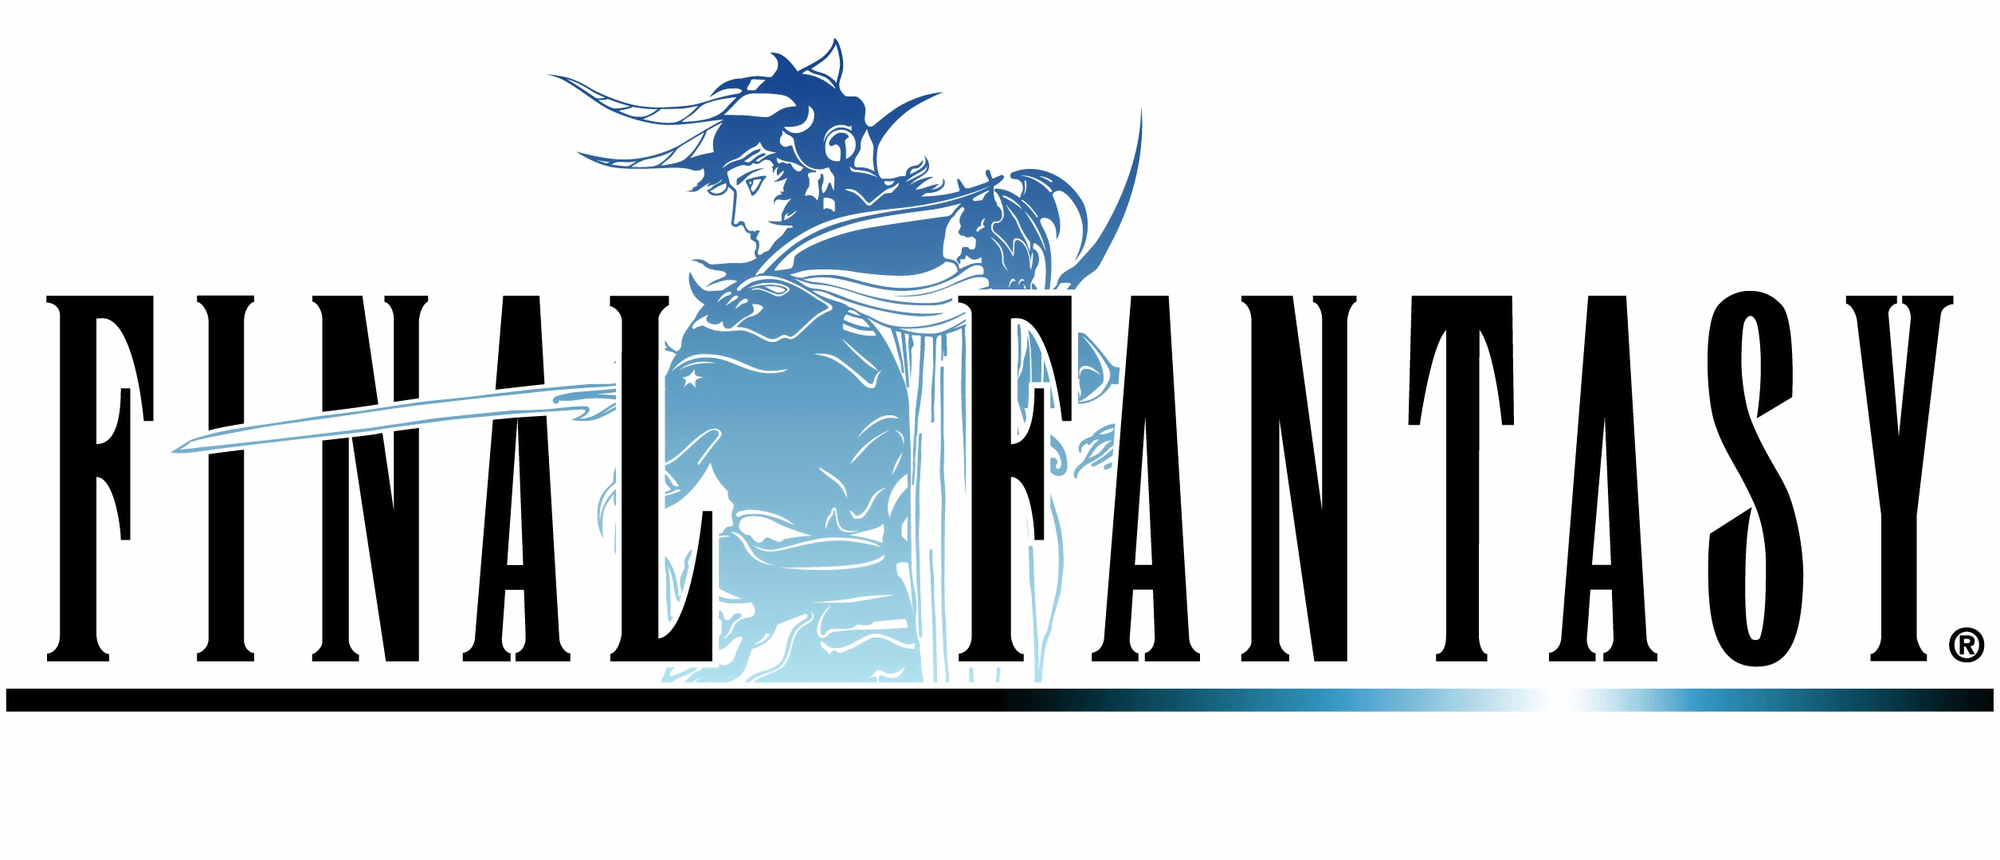 Noctis Logo - Logos of Final Fantasy | Final Fantasy Wiki | FANDOM powered by Wikia